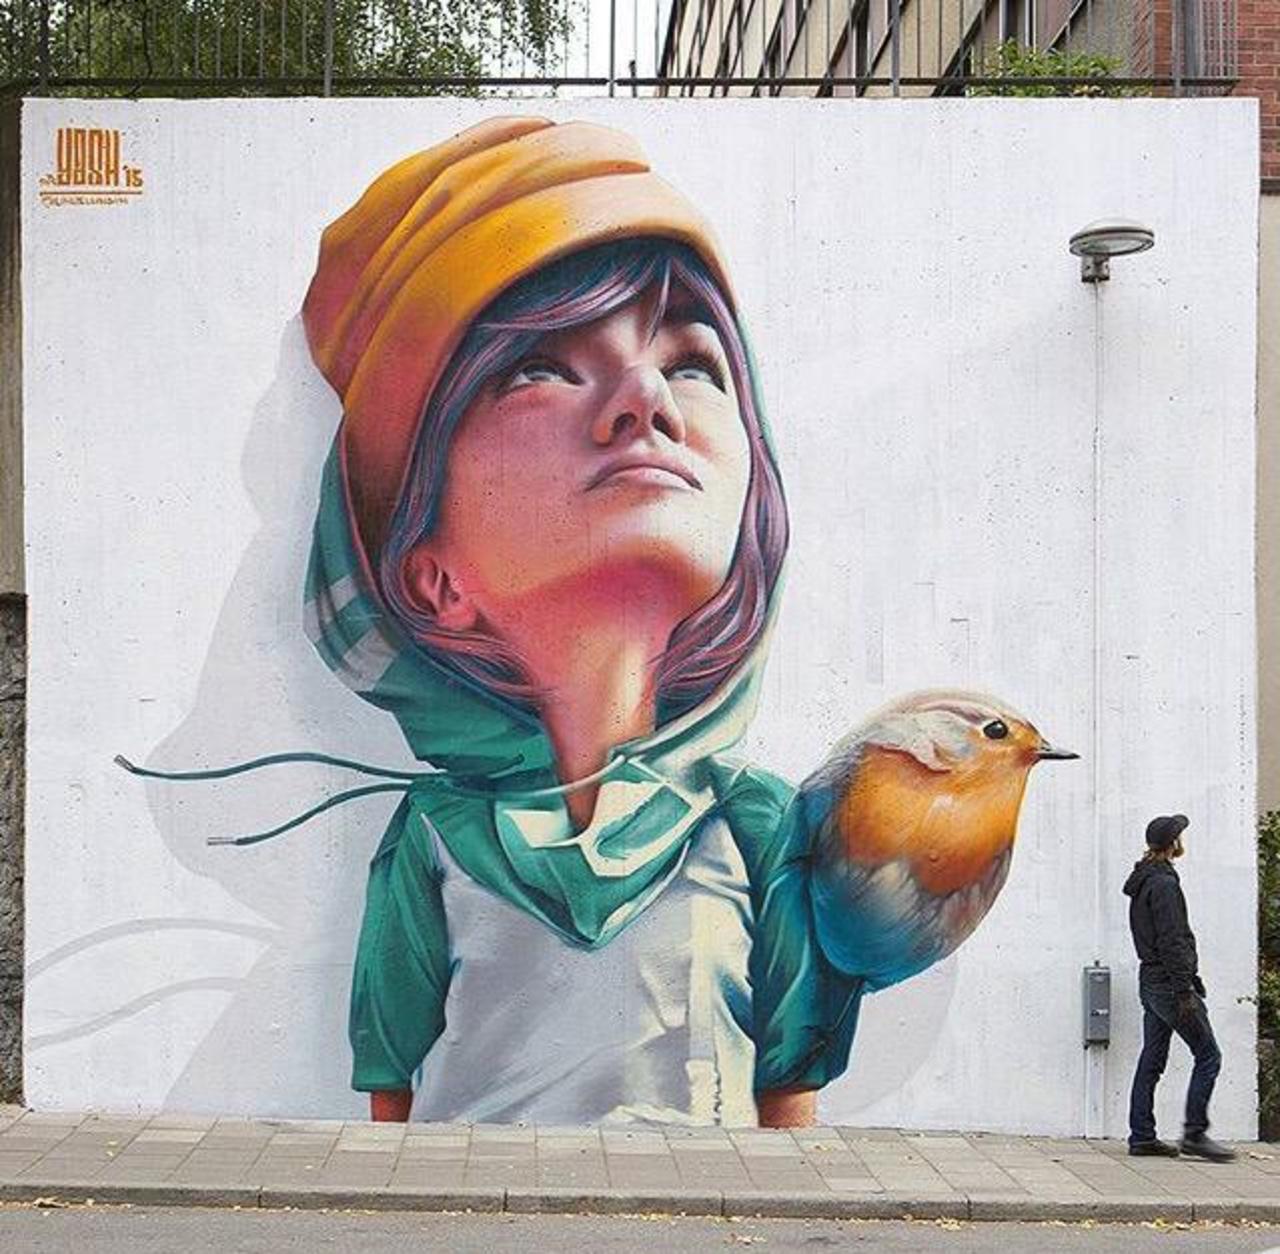 RT @GoogleStreetArt: New Street Art by Yash 

#art #graffiti #mural #streetart http://t.co/5JKo7a3TuQ